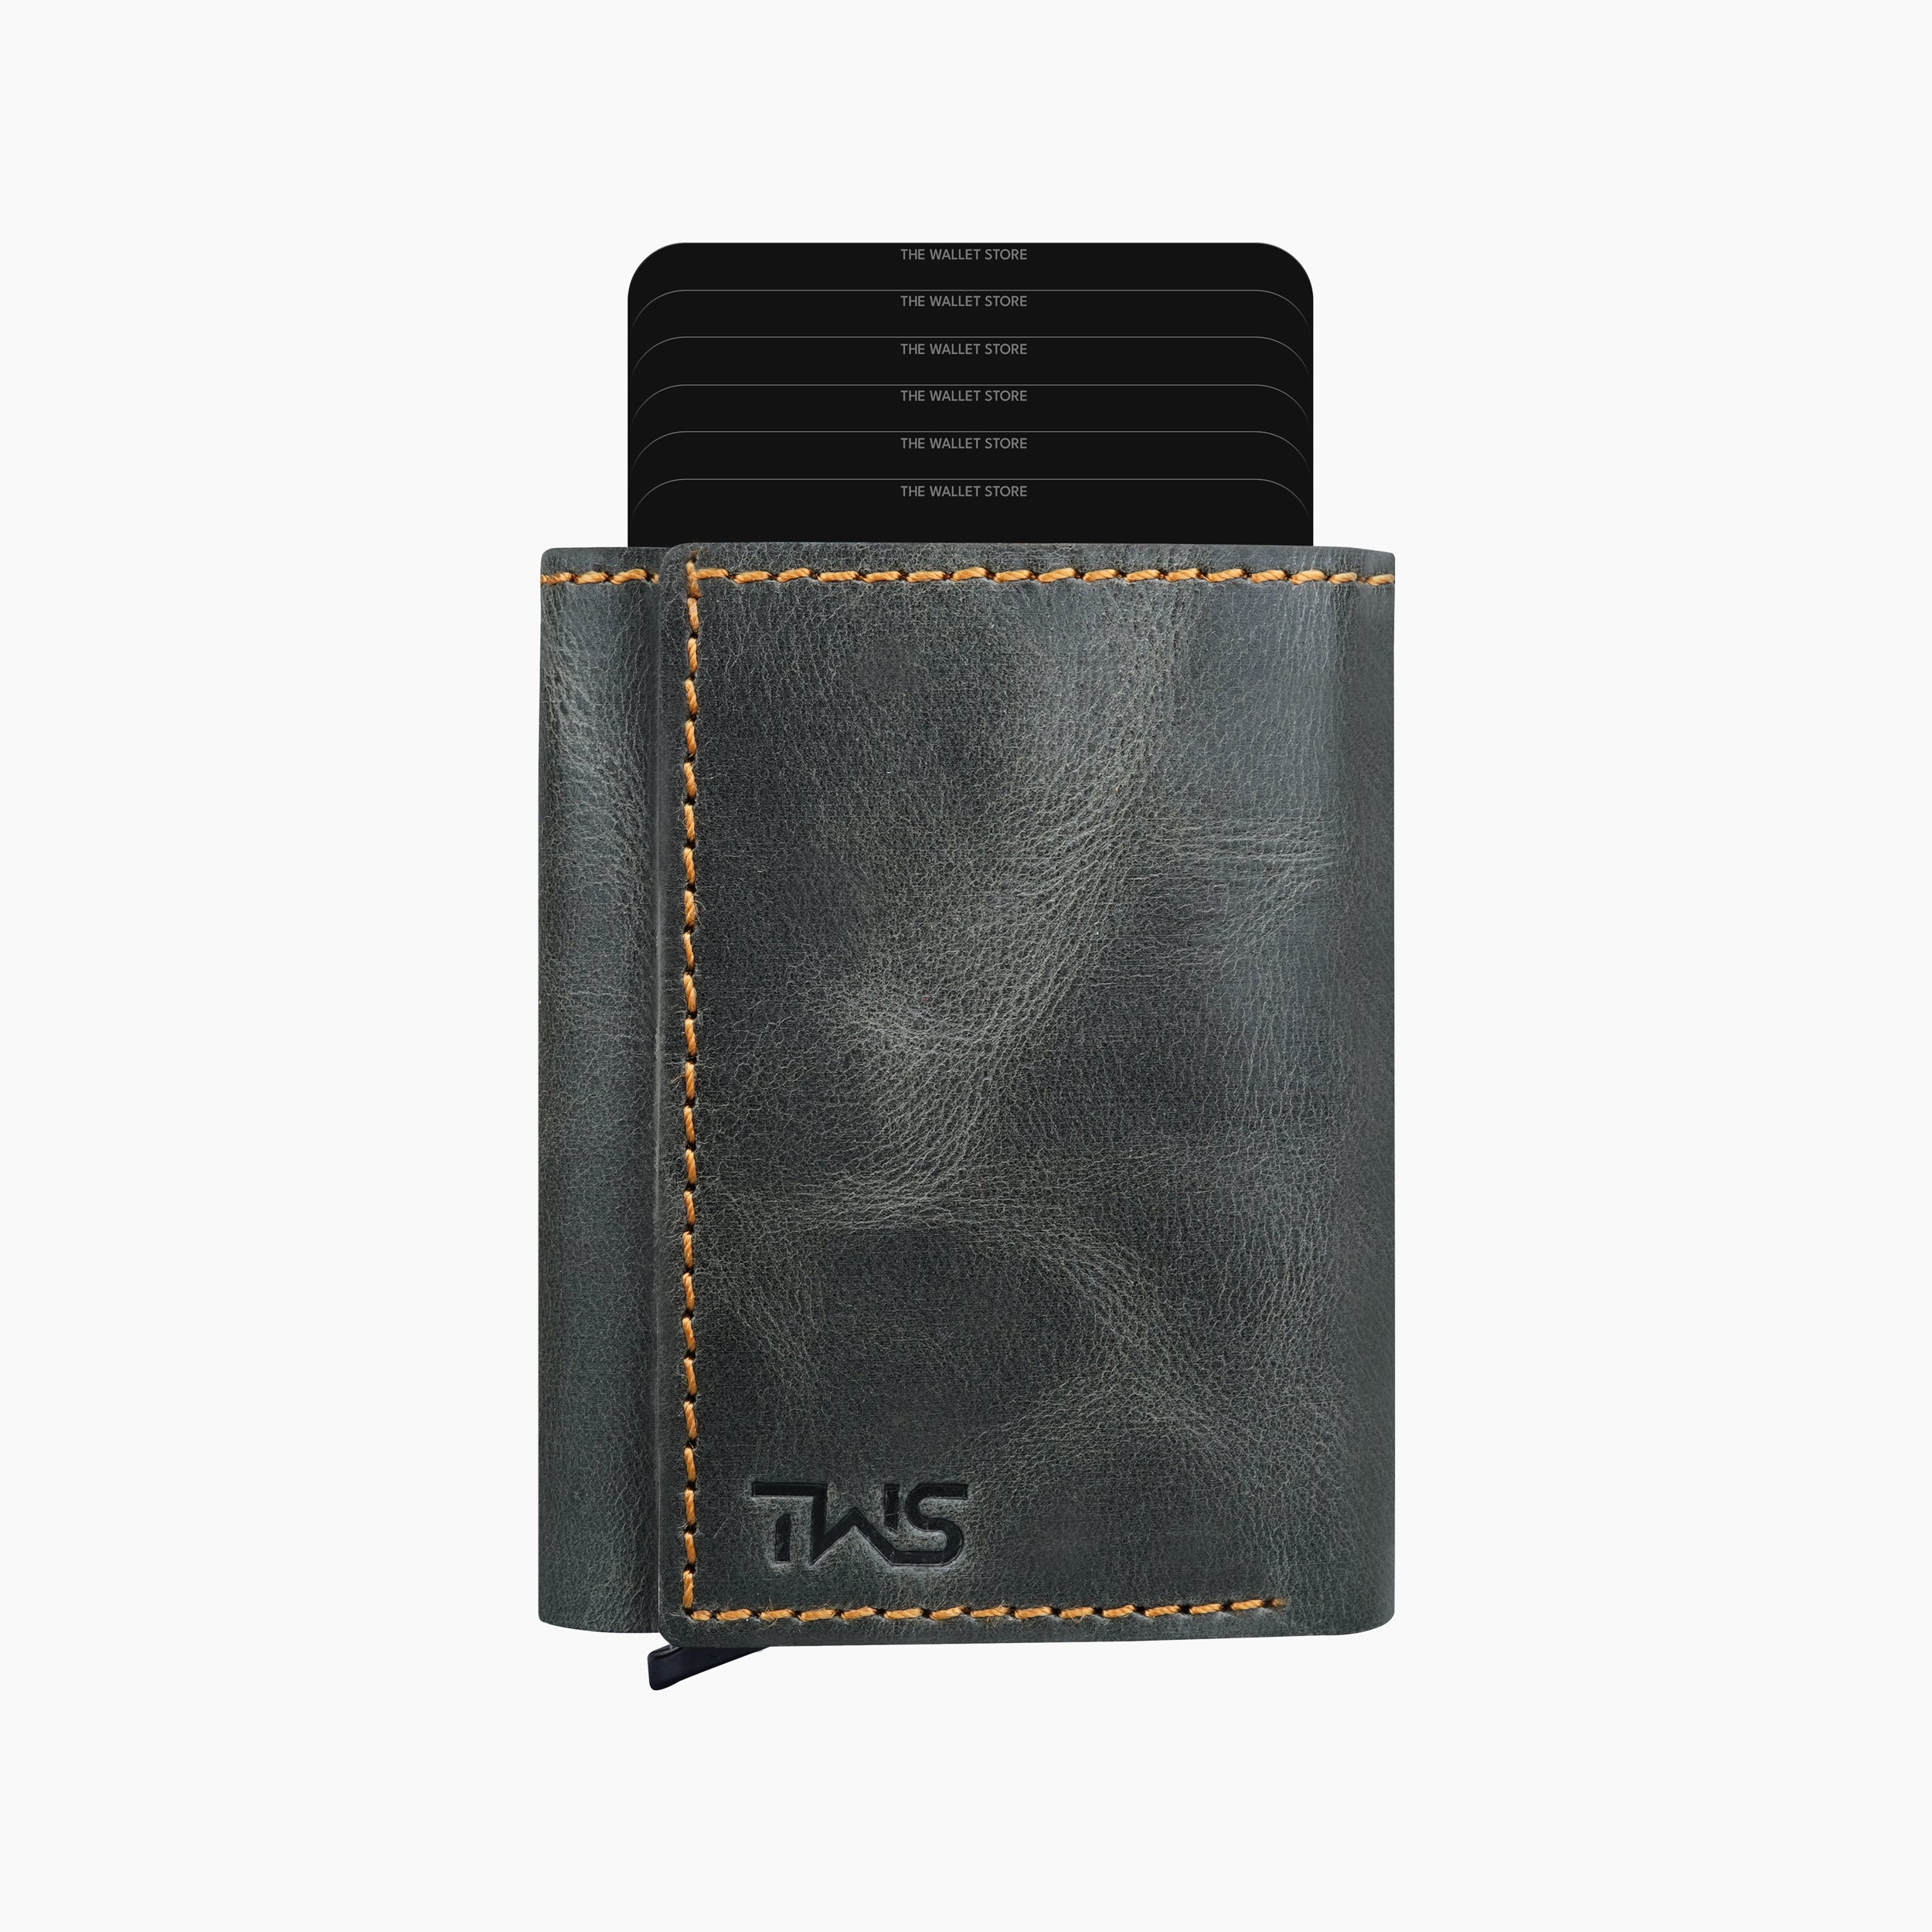 Ranger Genuine Leather RFID Protected Wallet Card Holder - Green